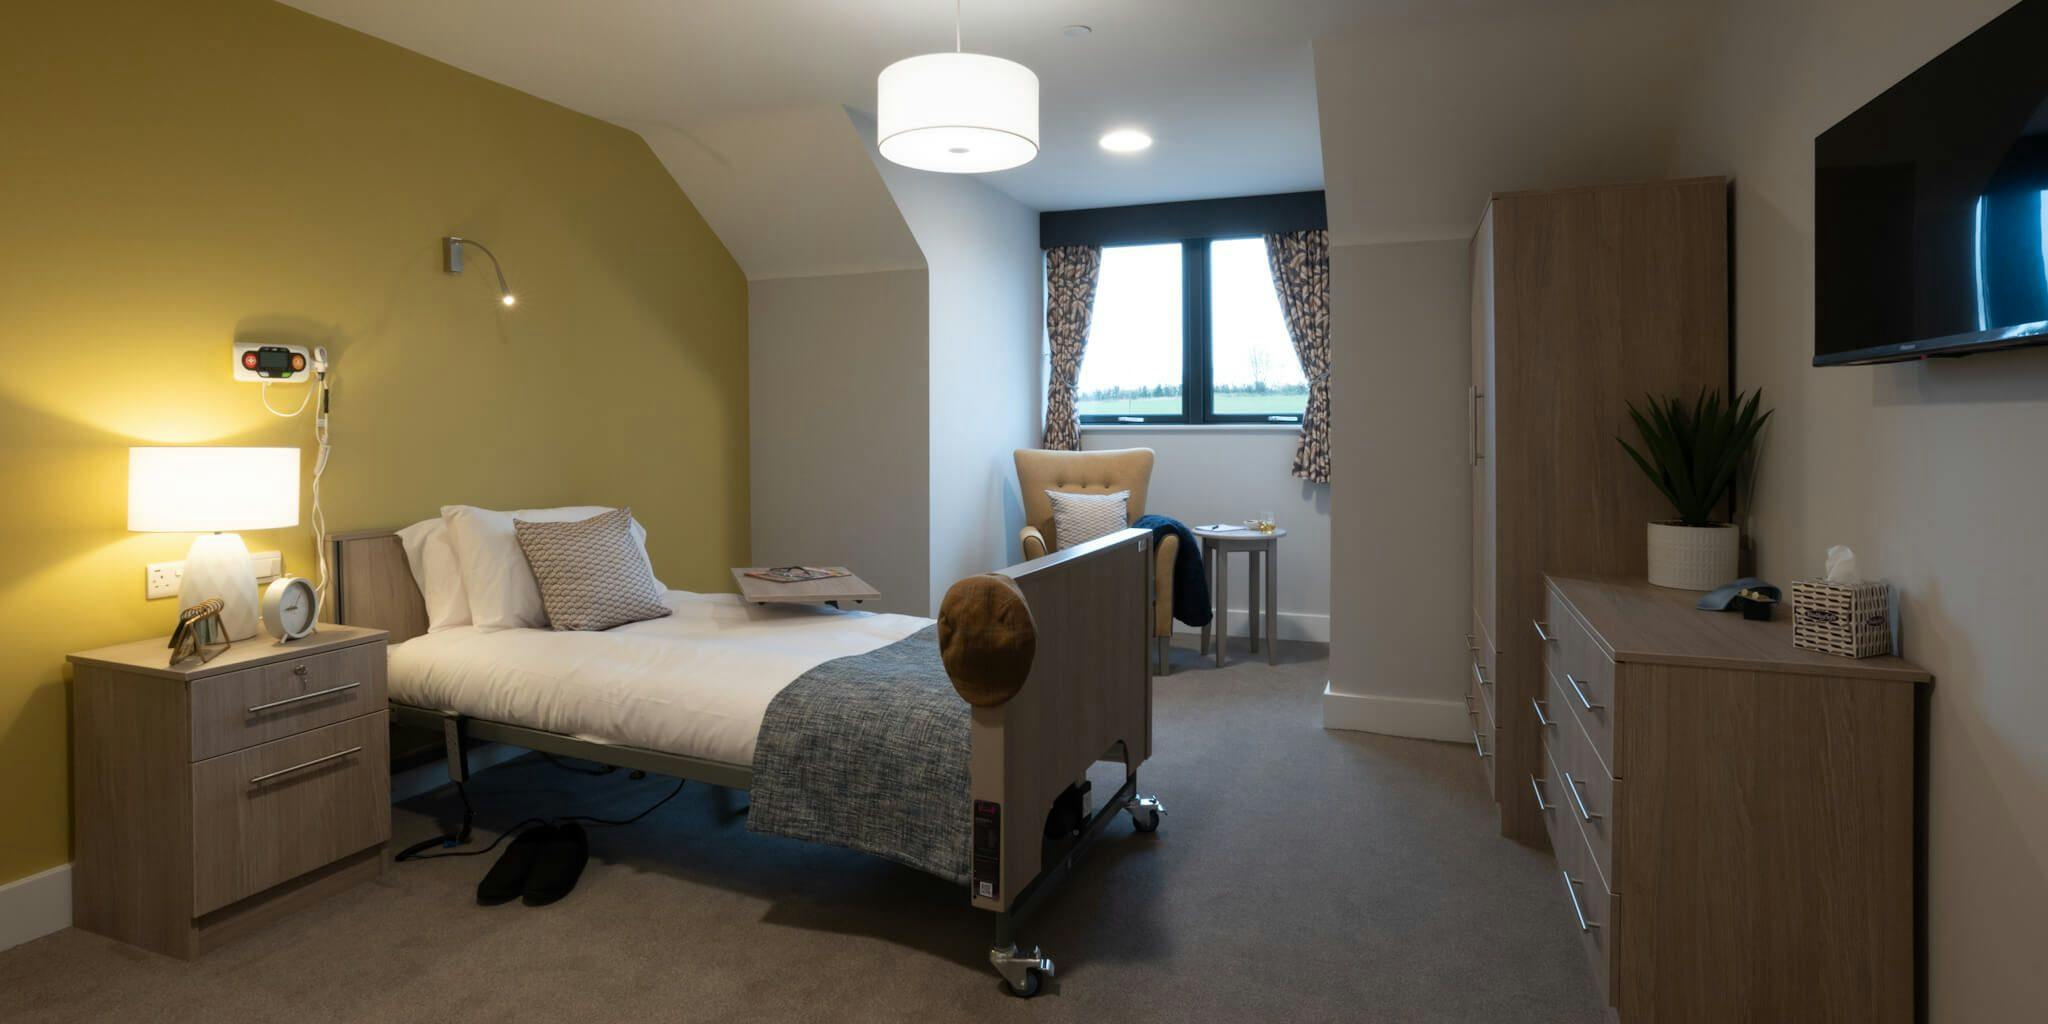 Bedroom at Rowan Park Care Home in Radstock, Somerset